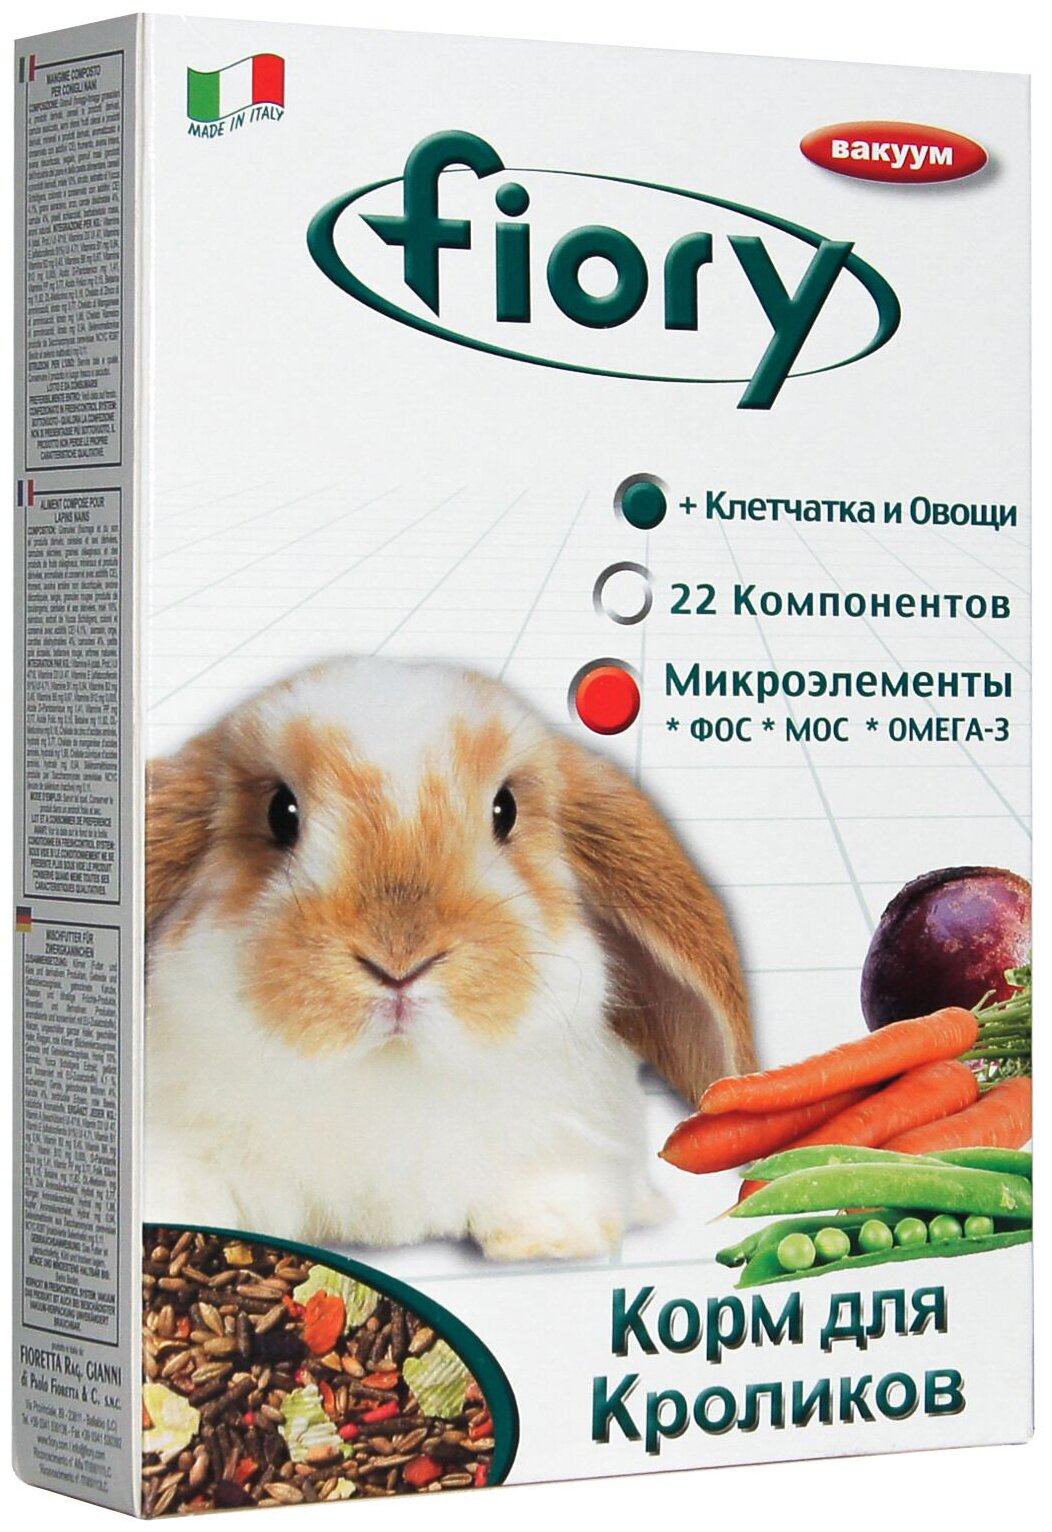 FIORY KARAOTE — Фиори корм для кроликов (850 гр)